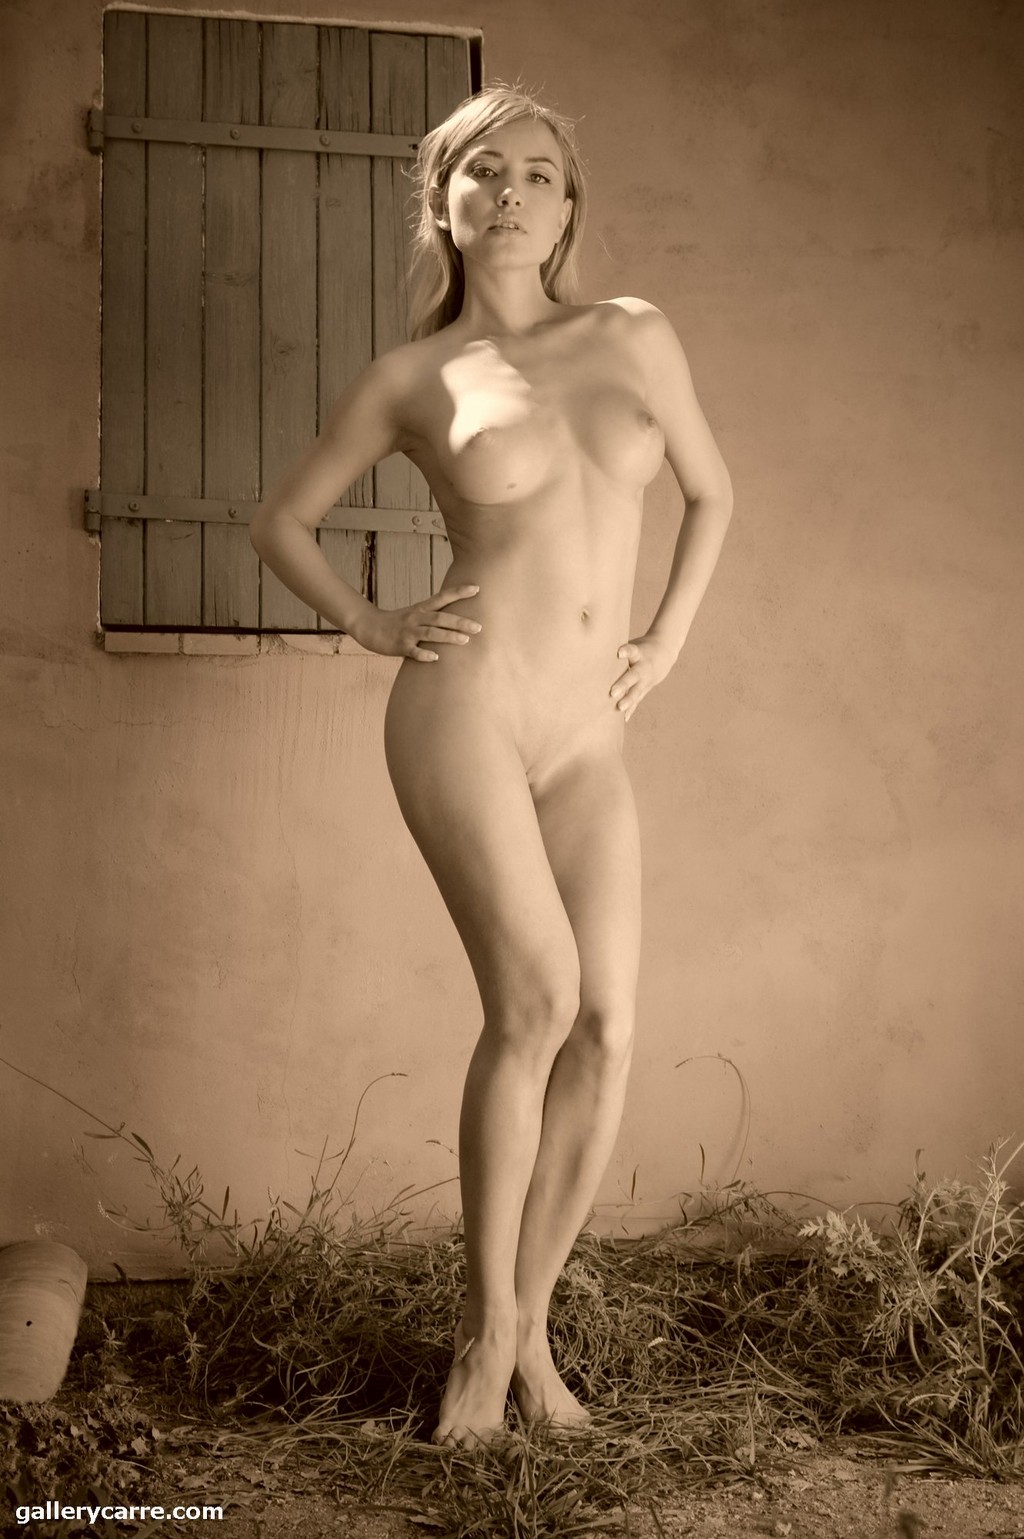 Lia May Poses Naked Outdoors